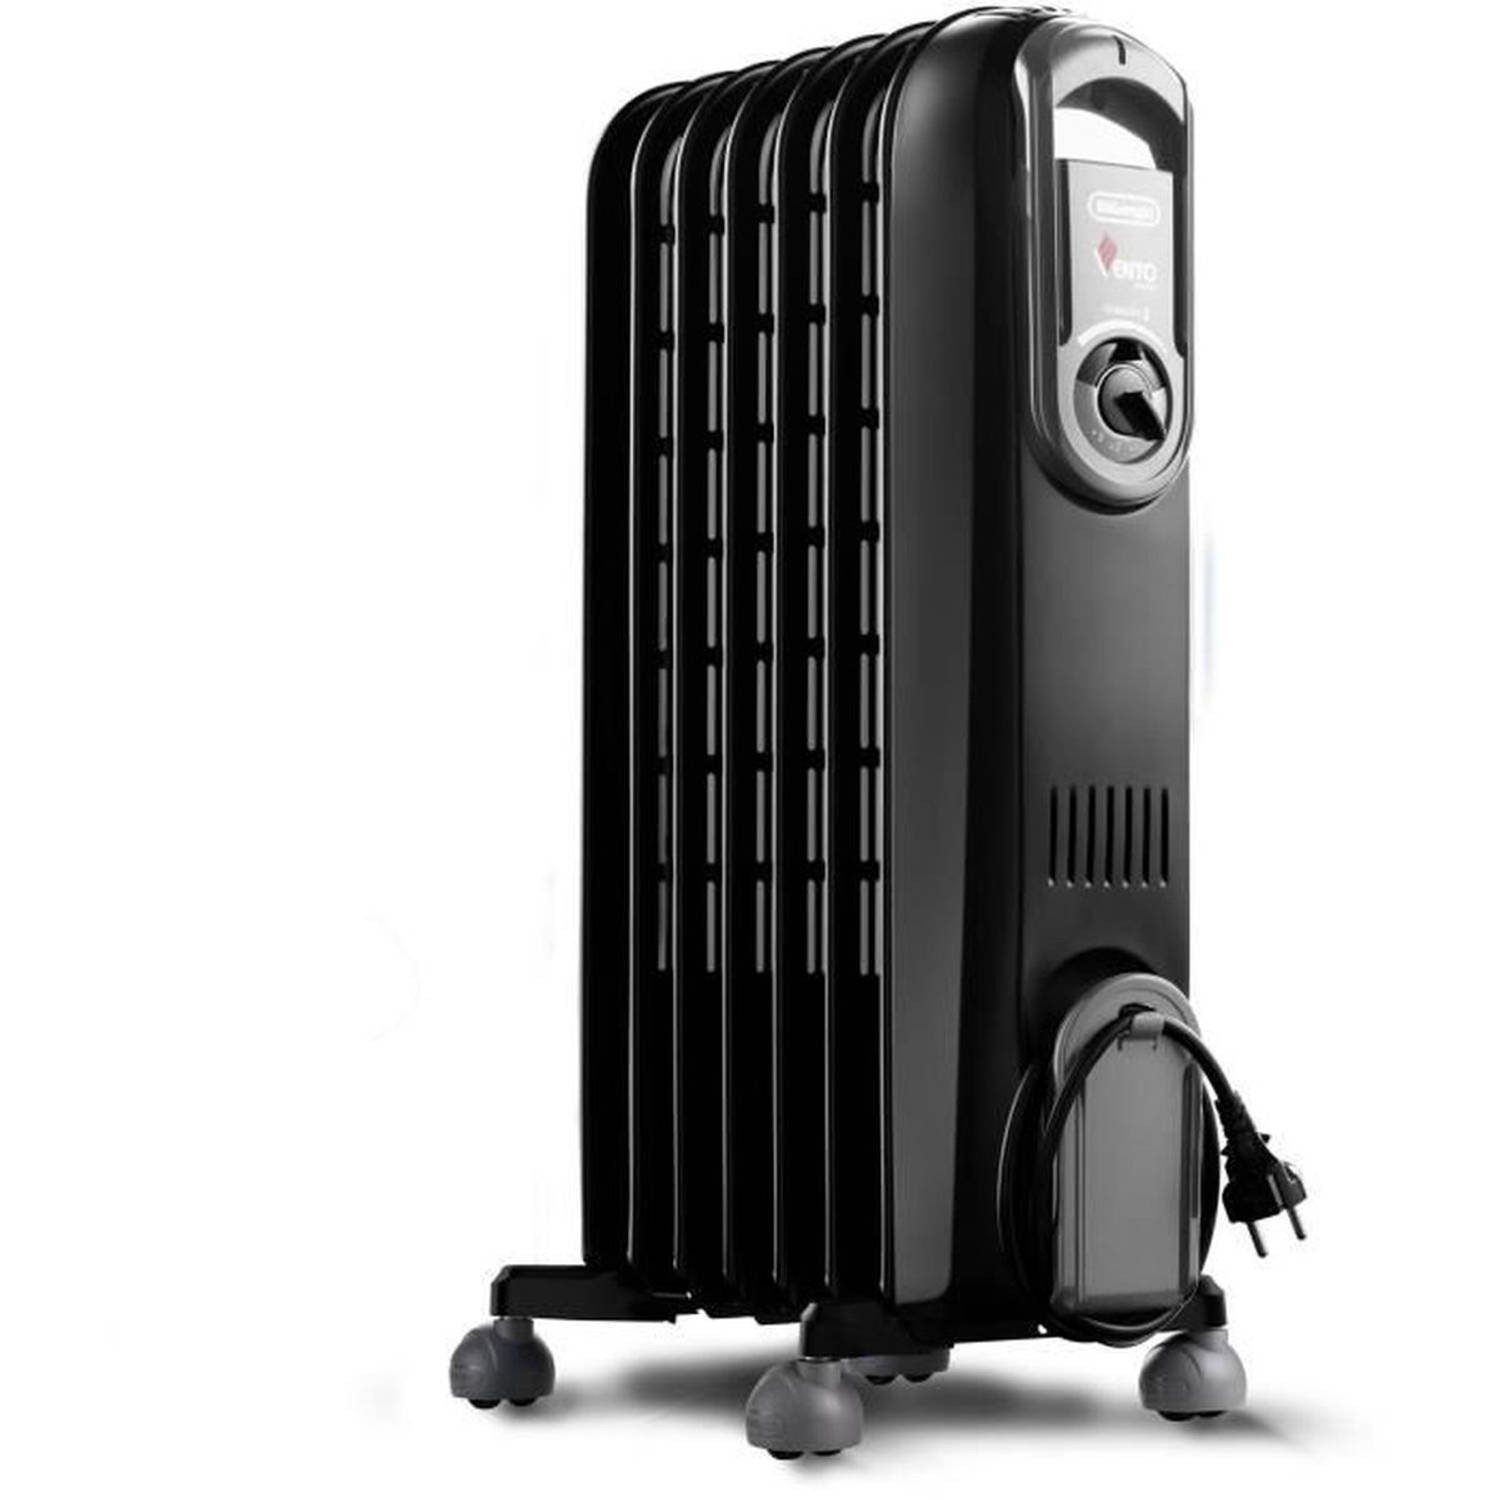 VENTO DELONGHI oliebad-radiator 1500 W 3 verwarmingsniveaus Real Energy technologie